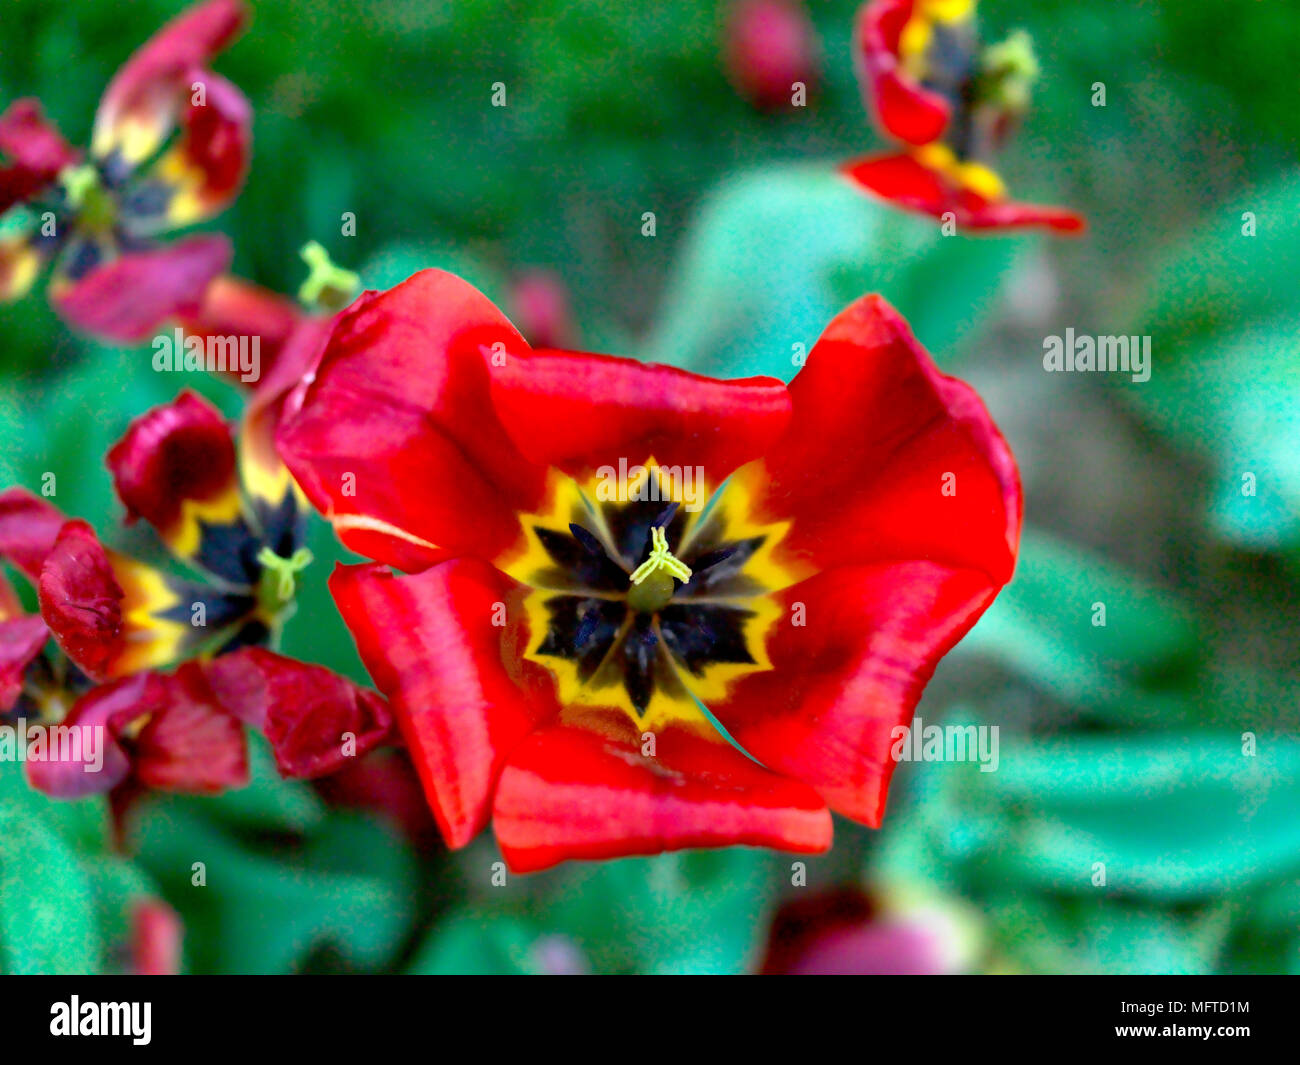 Colorful Tulips in Public Garden Stock Photo